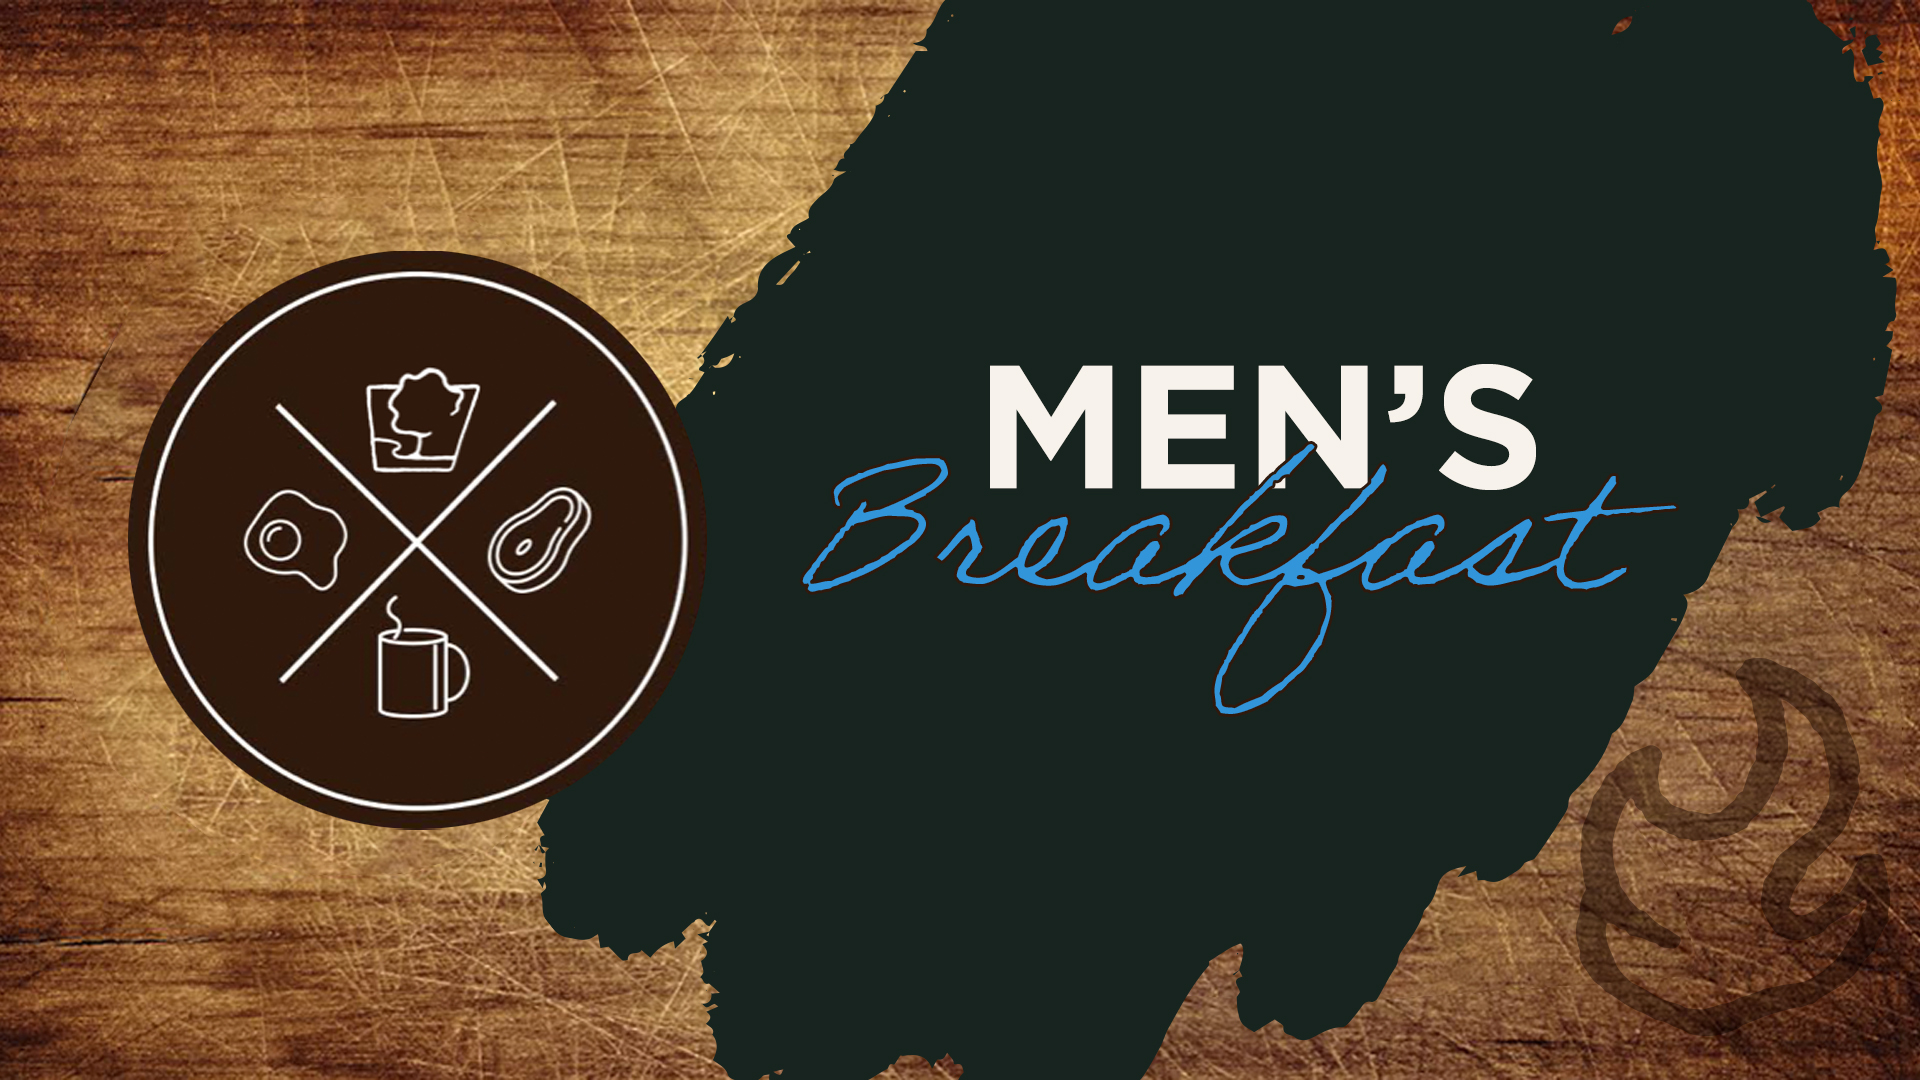 Men's Breakfast at The Chapel Milton - Chapel